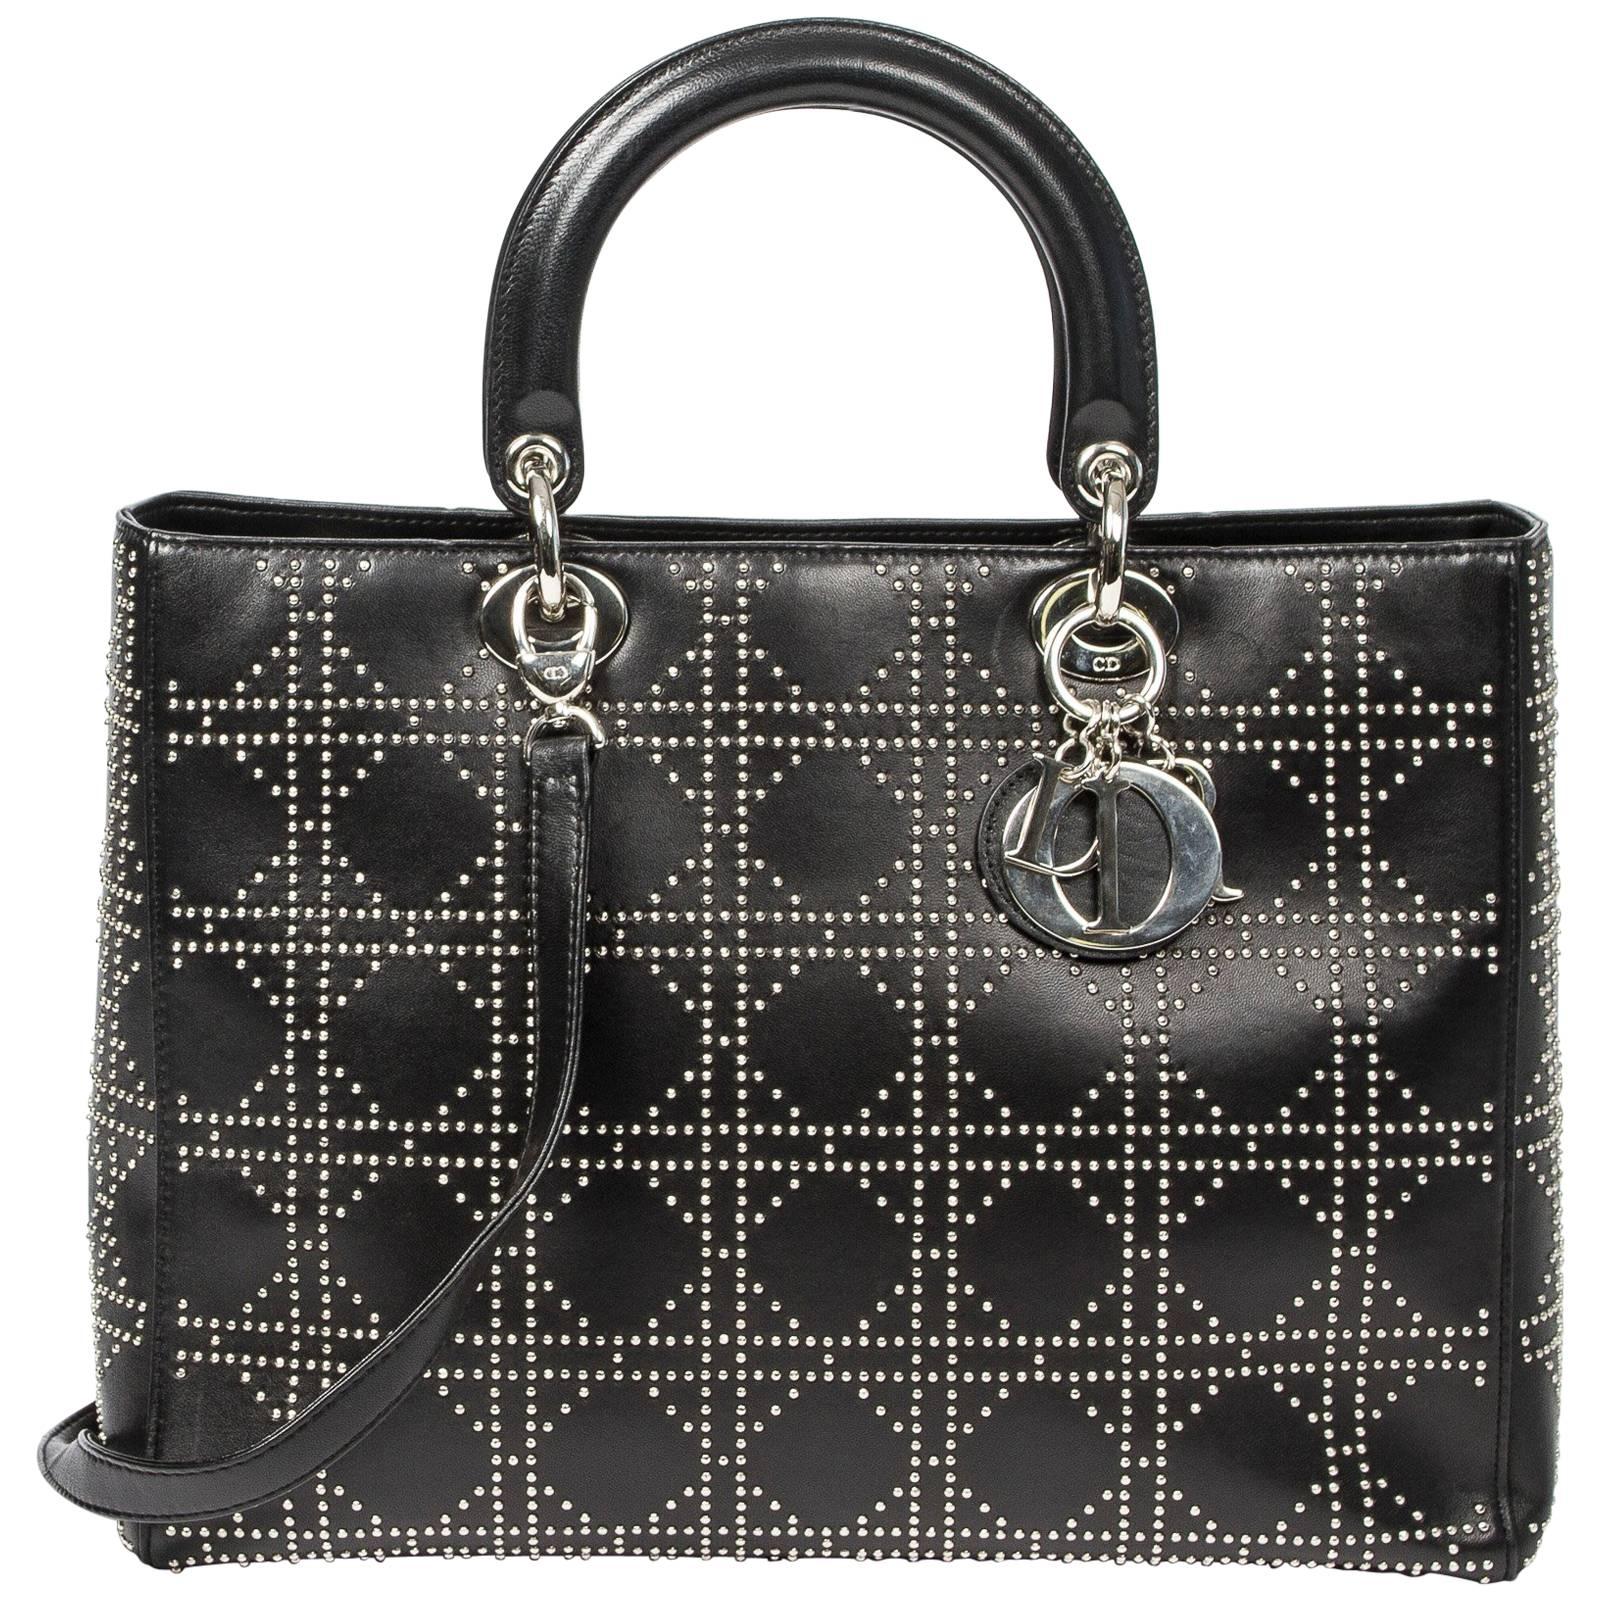 Lady Dior black stud cannage leather GM bag